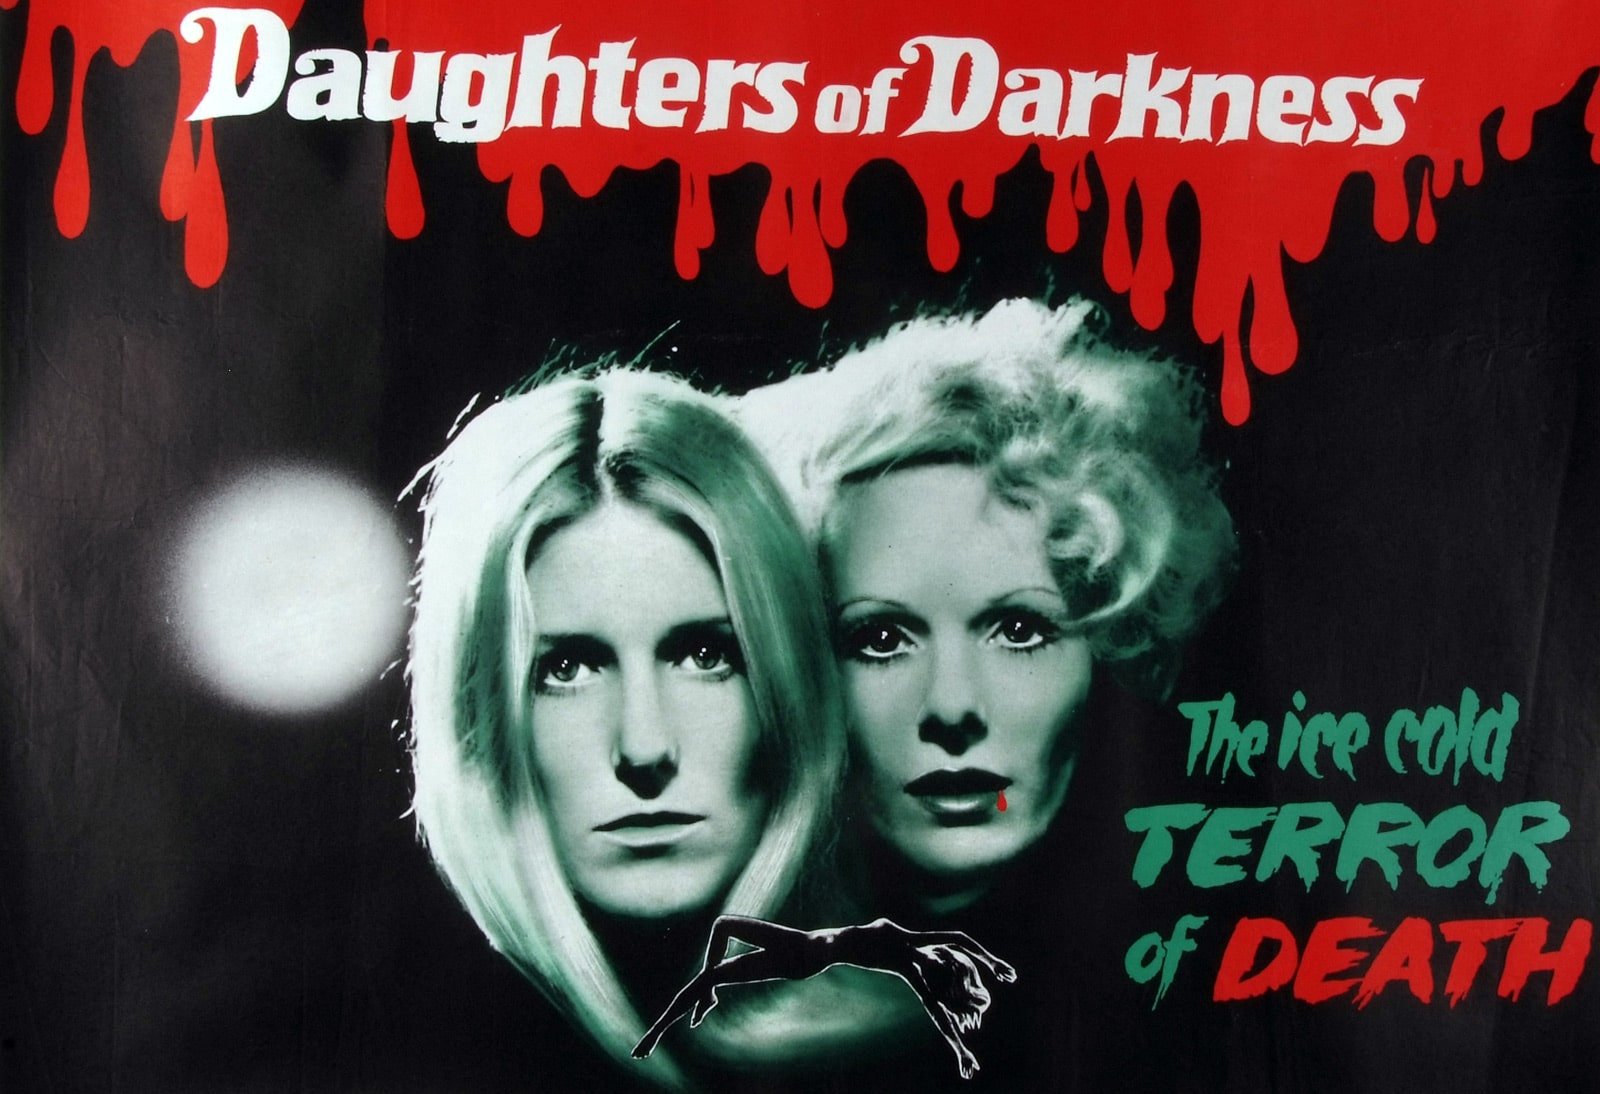 daughters of darkness